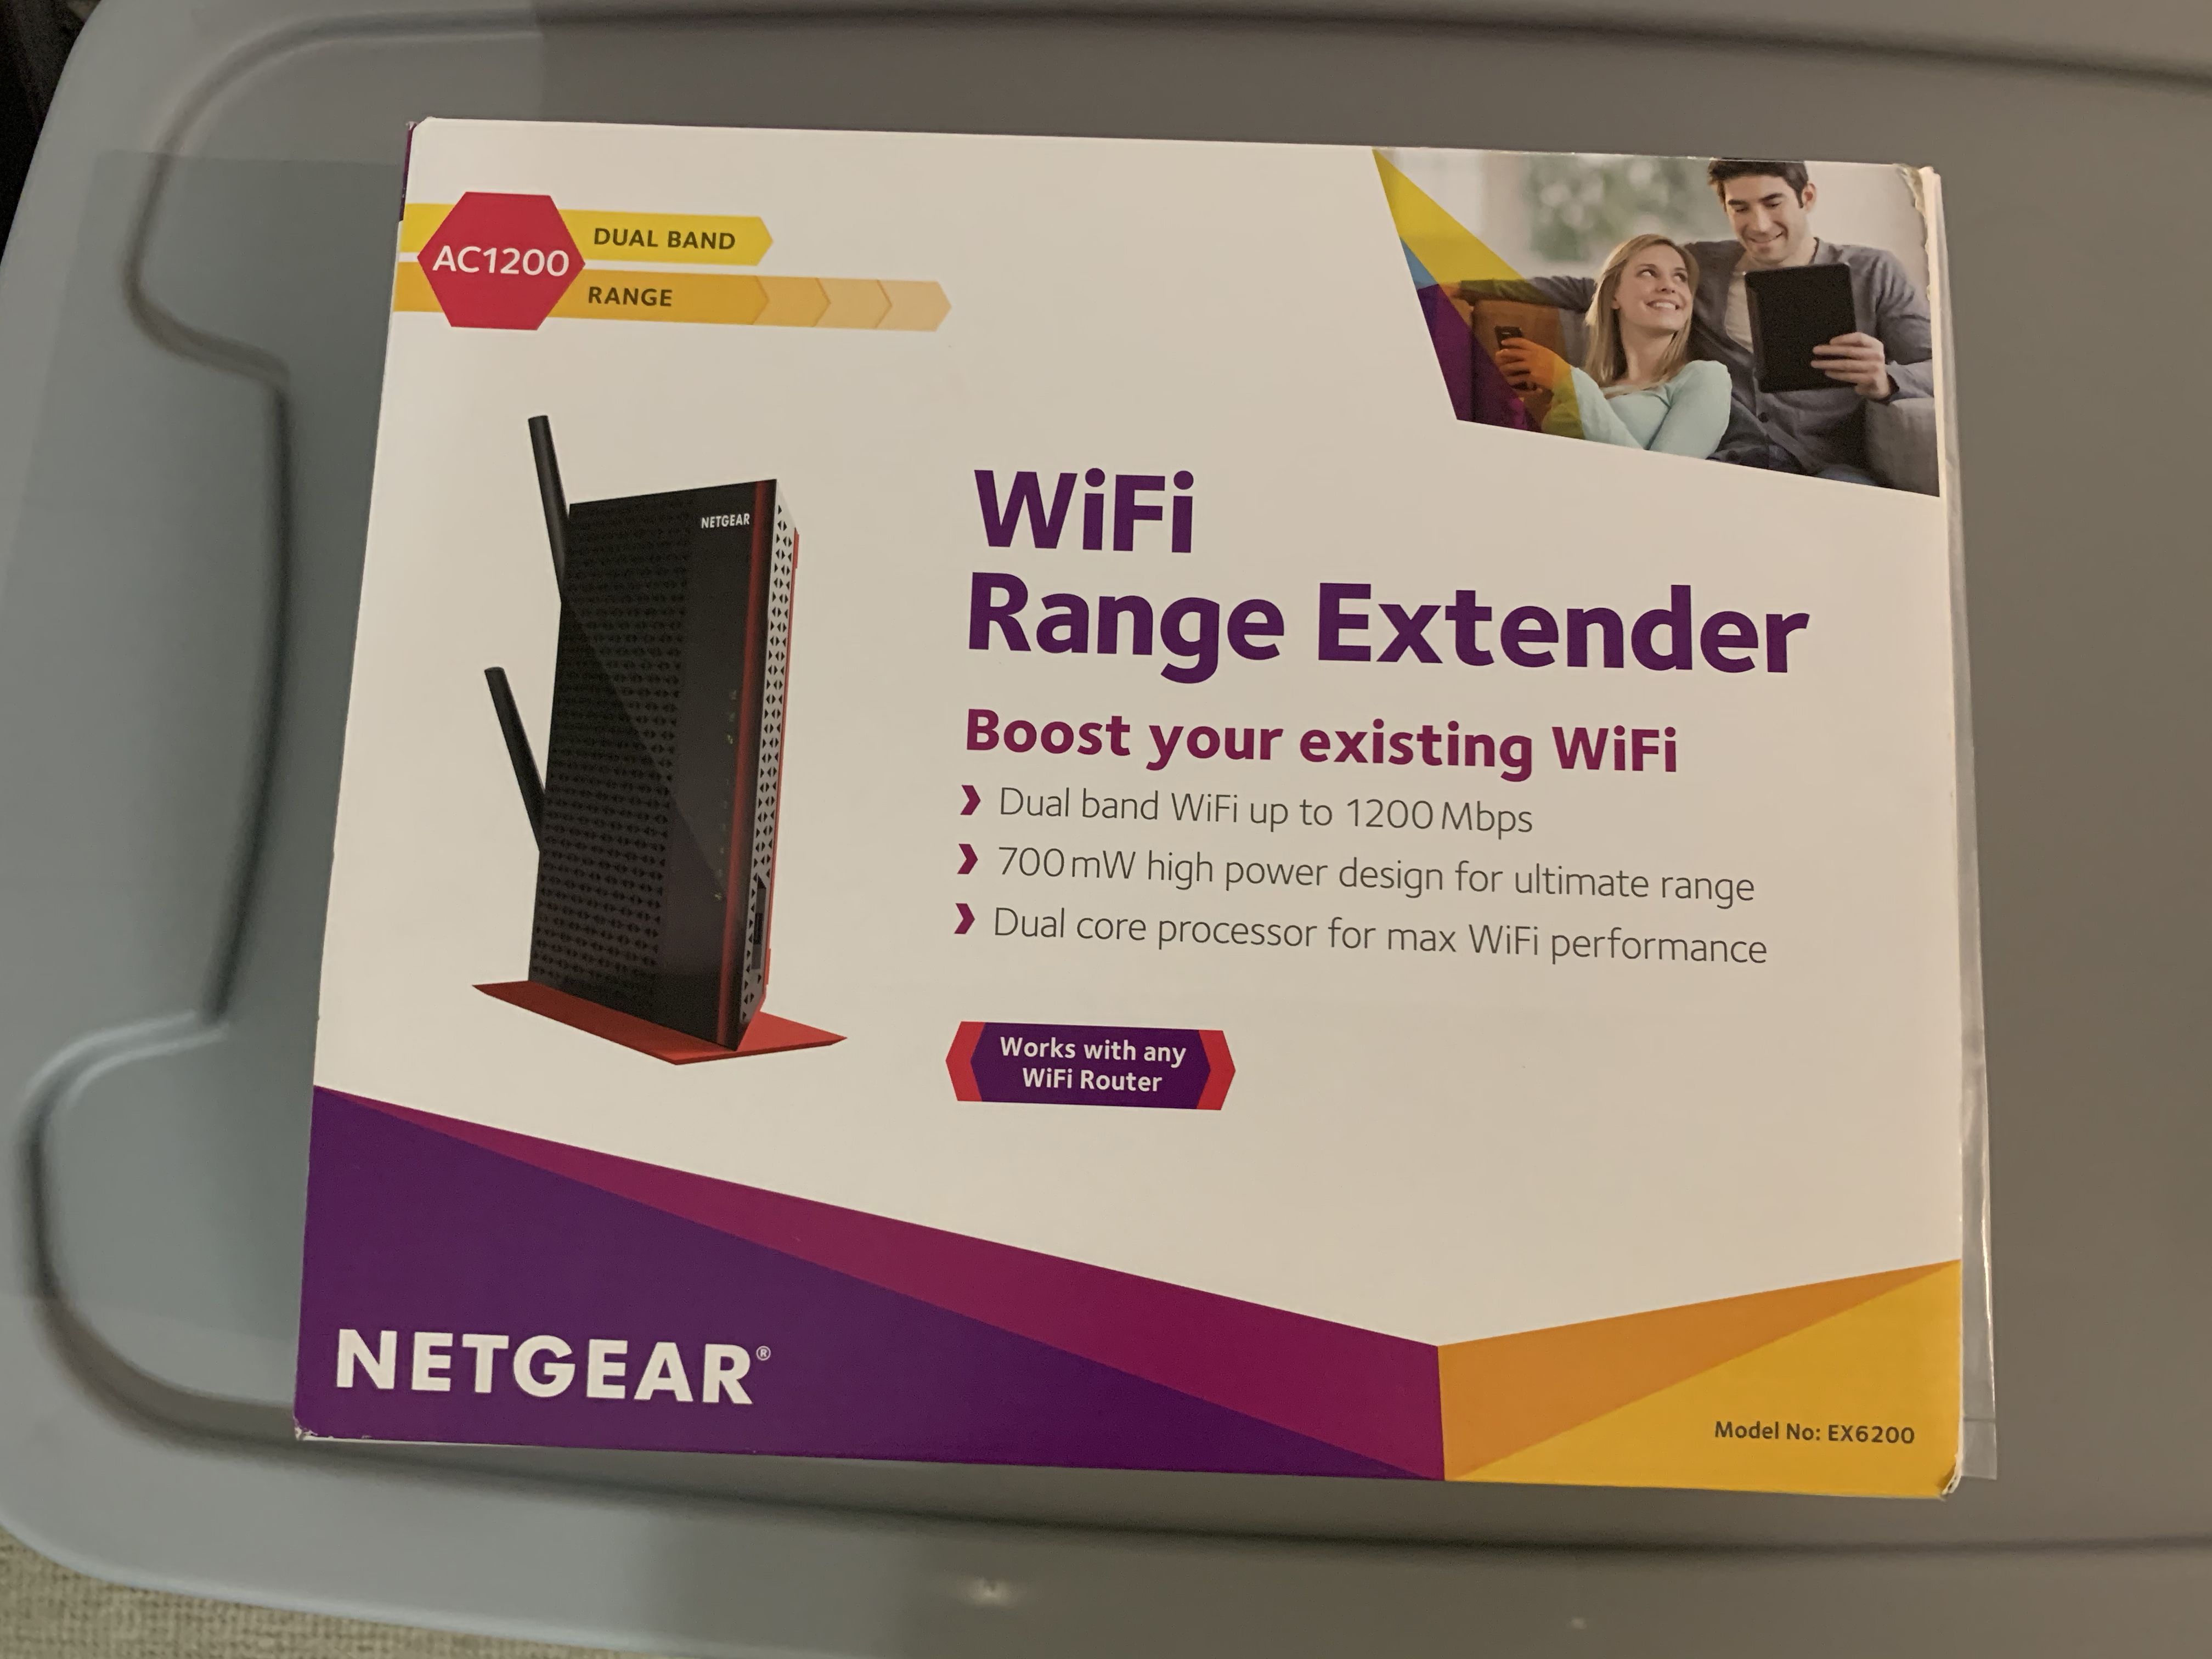 NETGEAR AC1200 Wireless WiFi Range Extender (EX6200)